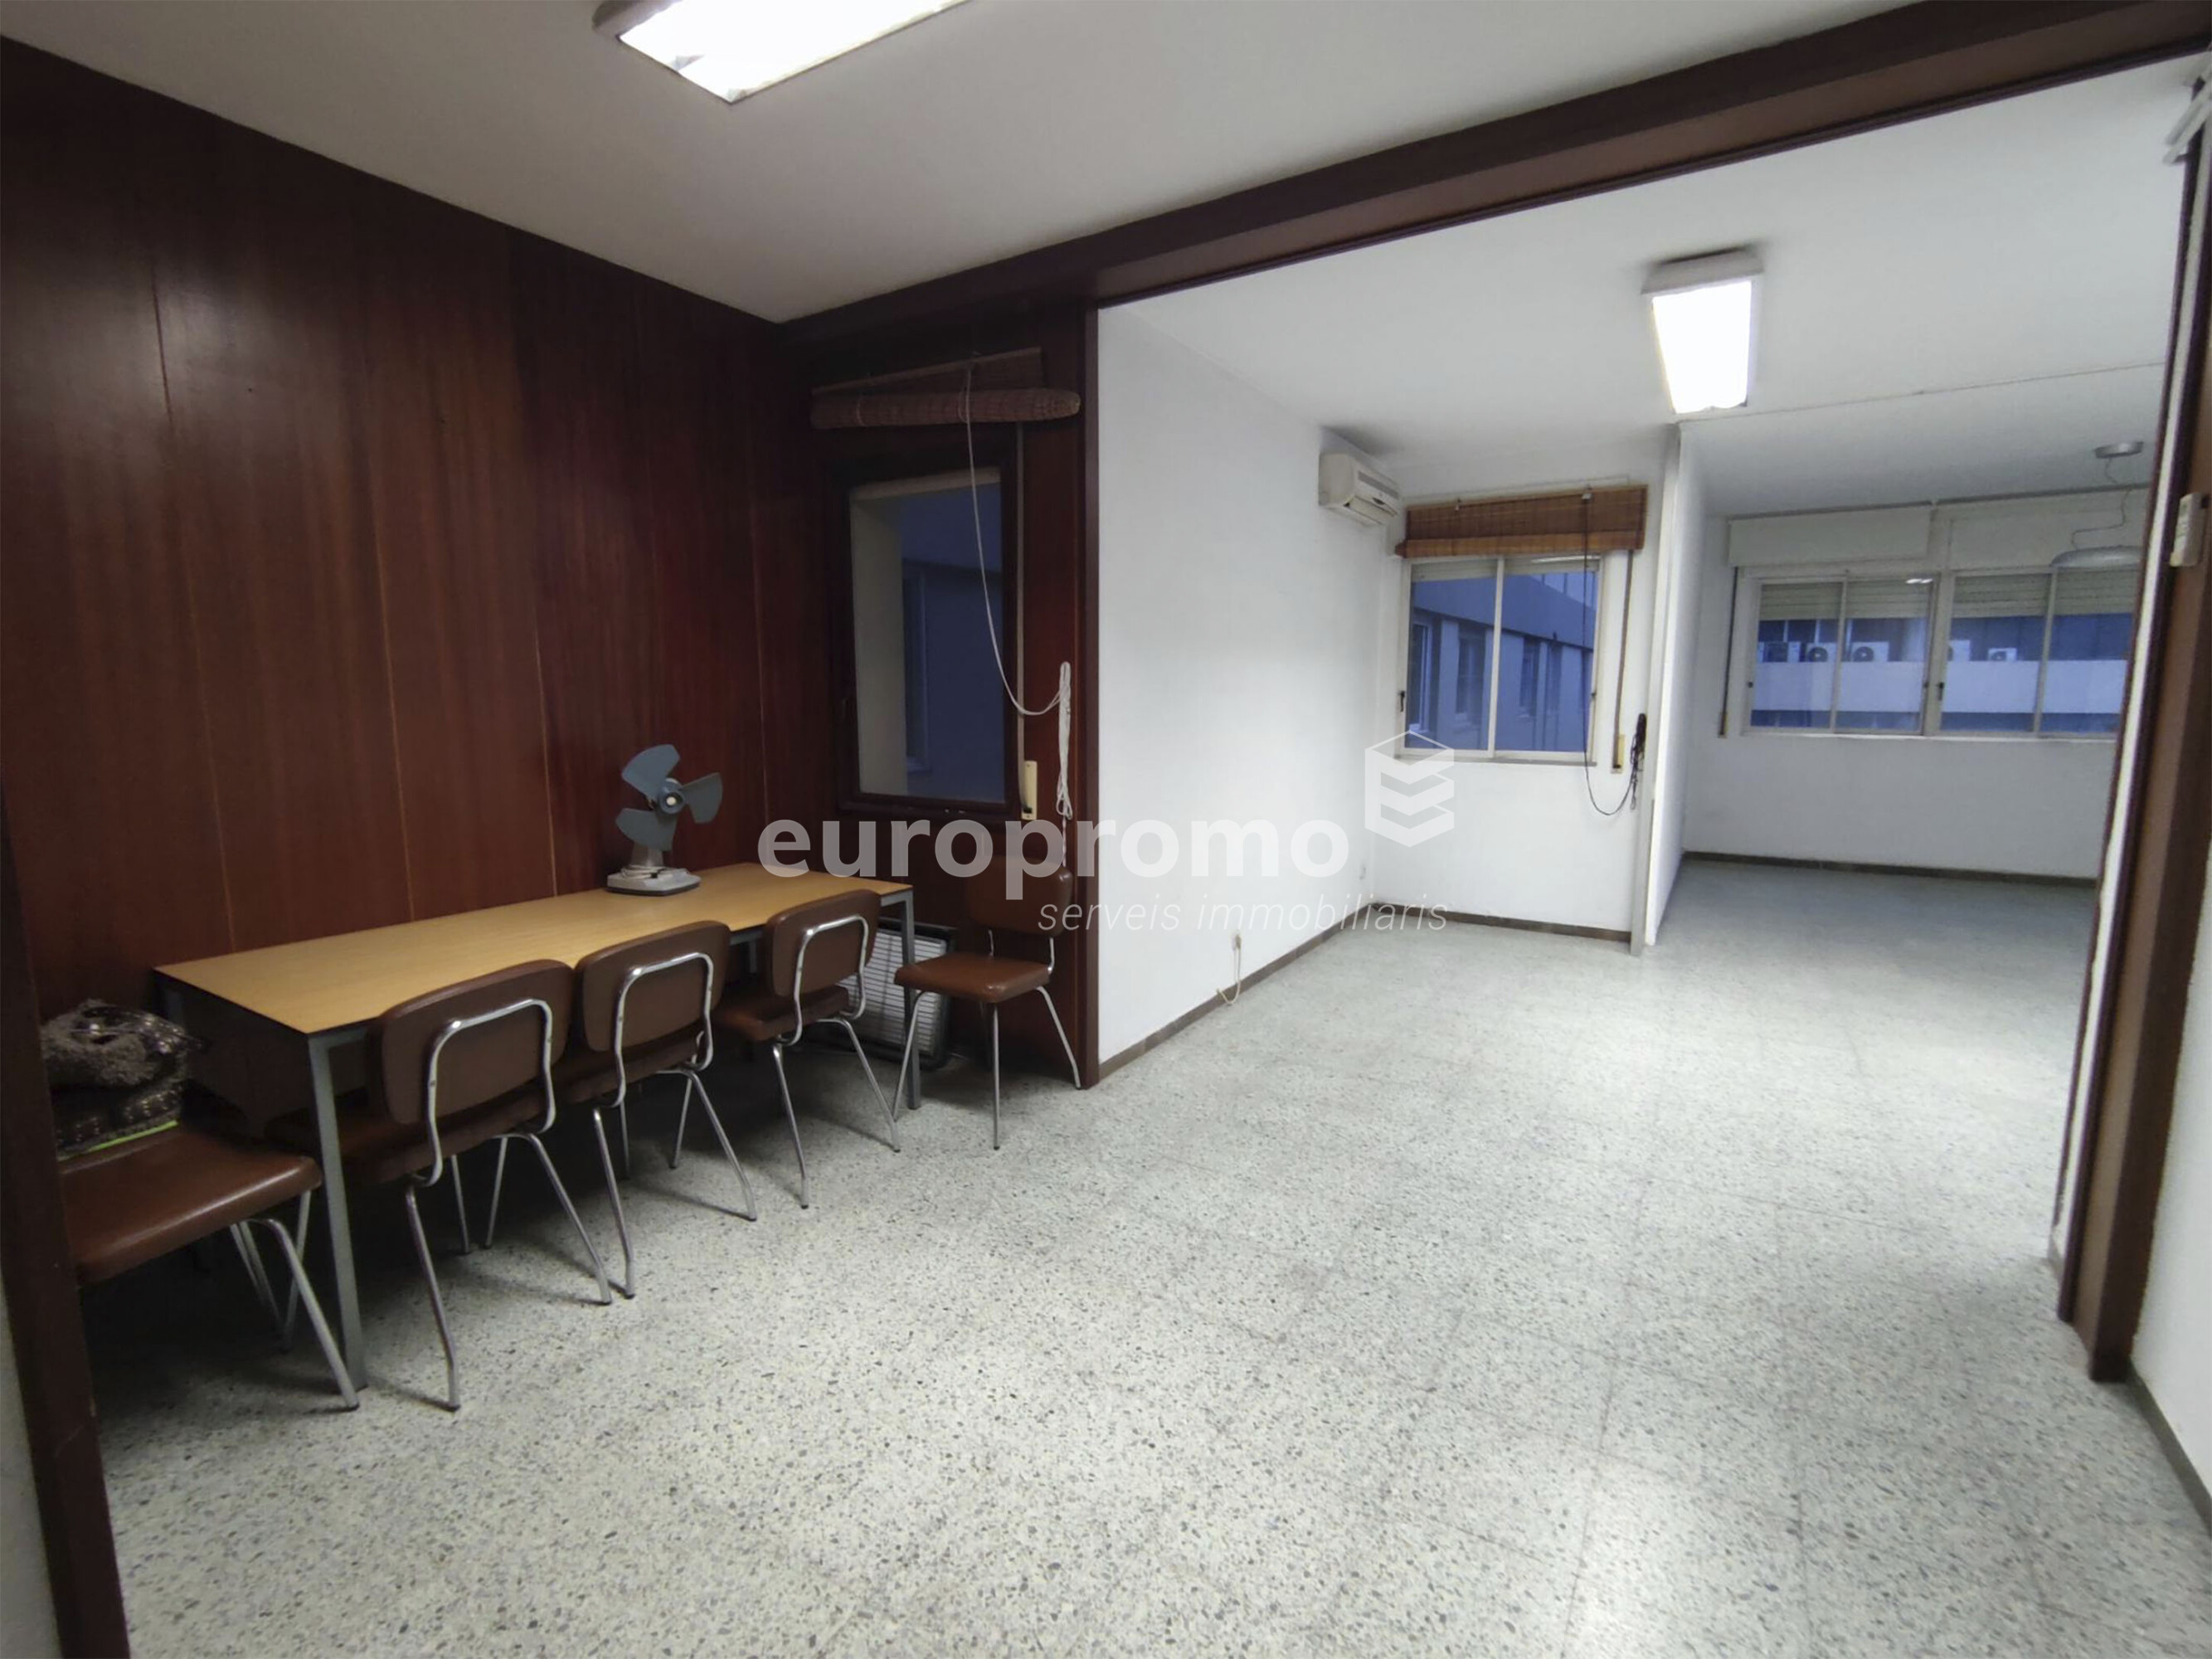 Oficina de 60 m2 en el centro de Girona- Jaume I